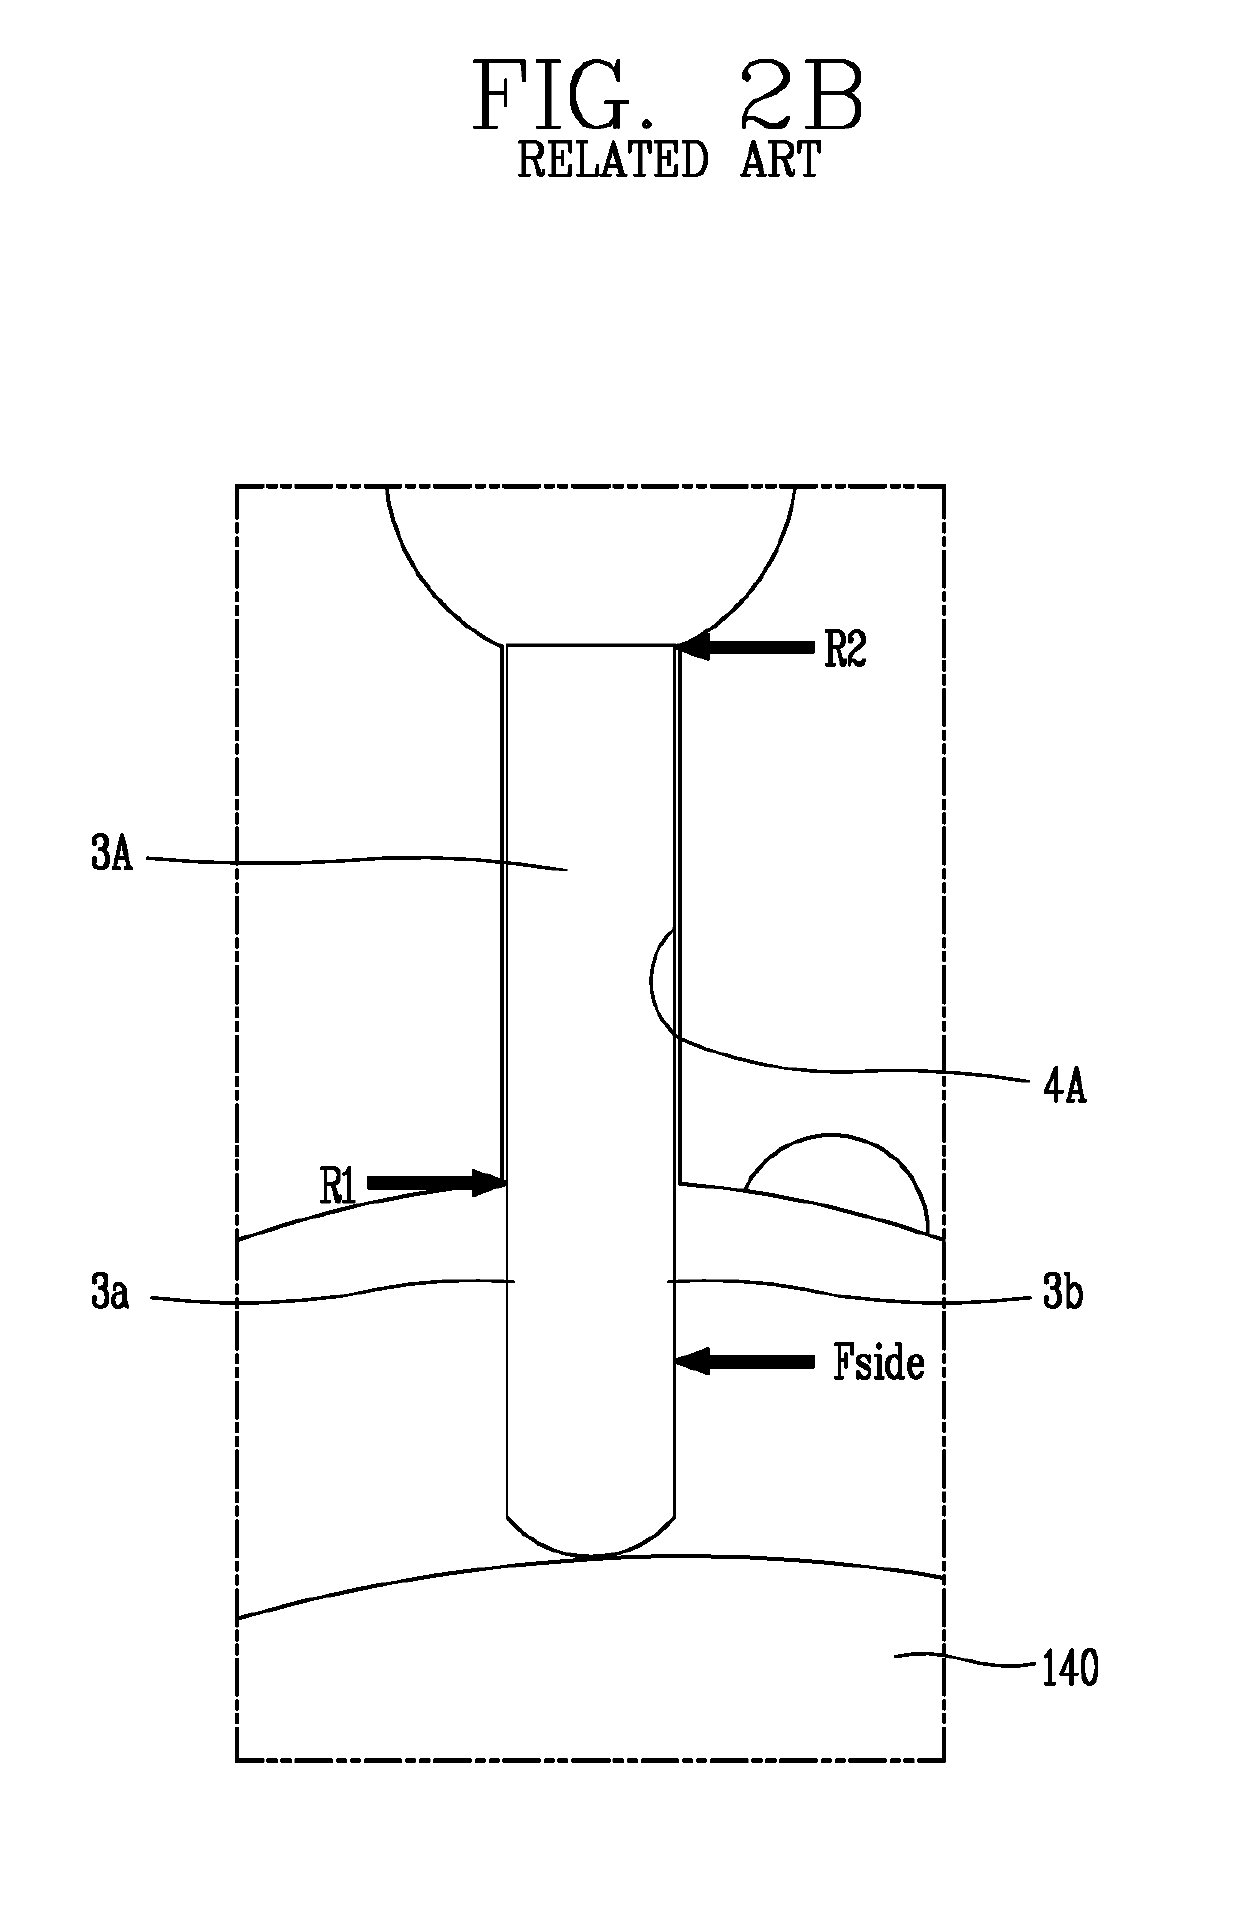 Rotary compressor having fluid passage between sliding vane and vane slot